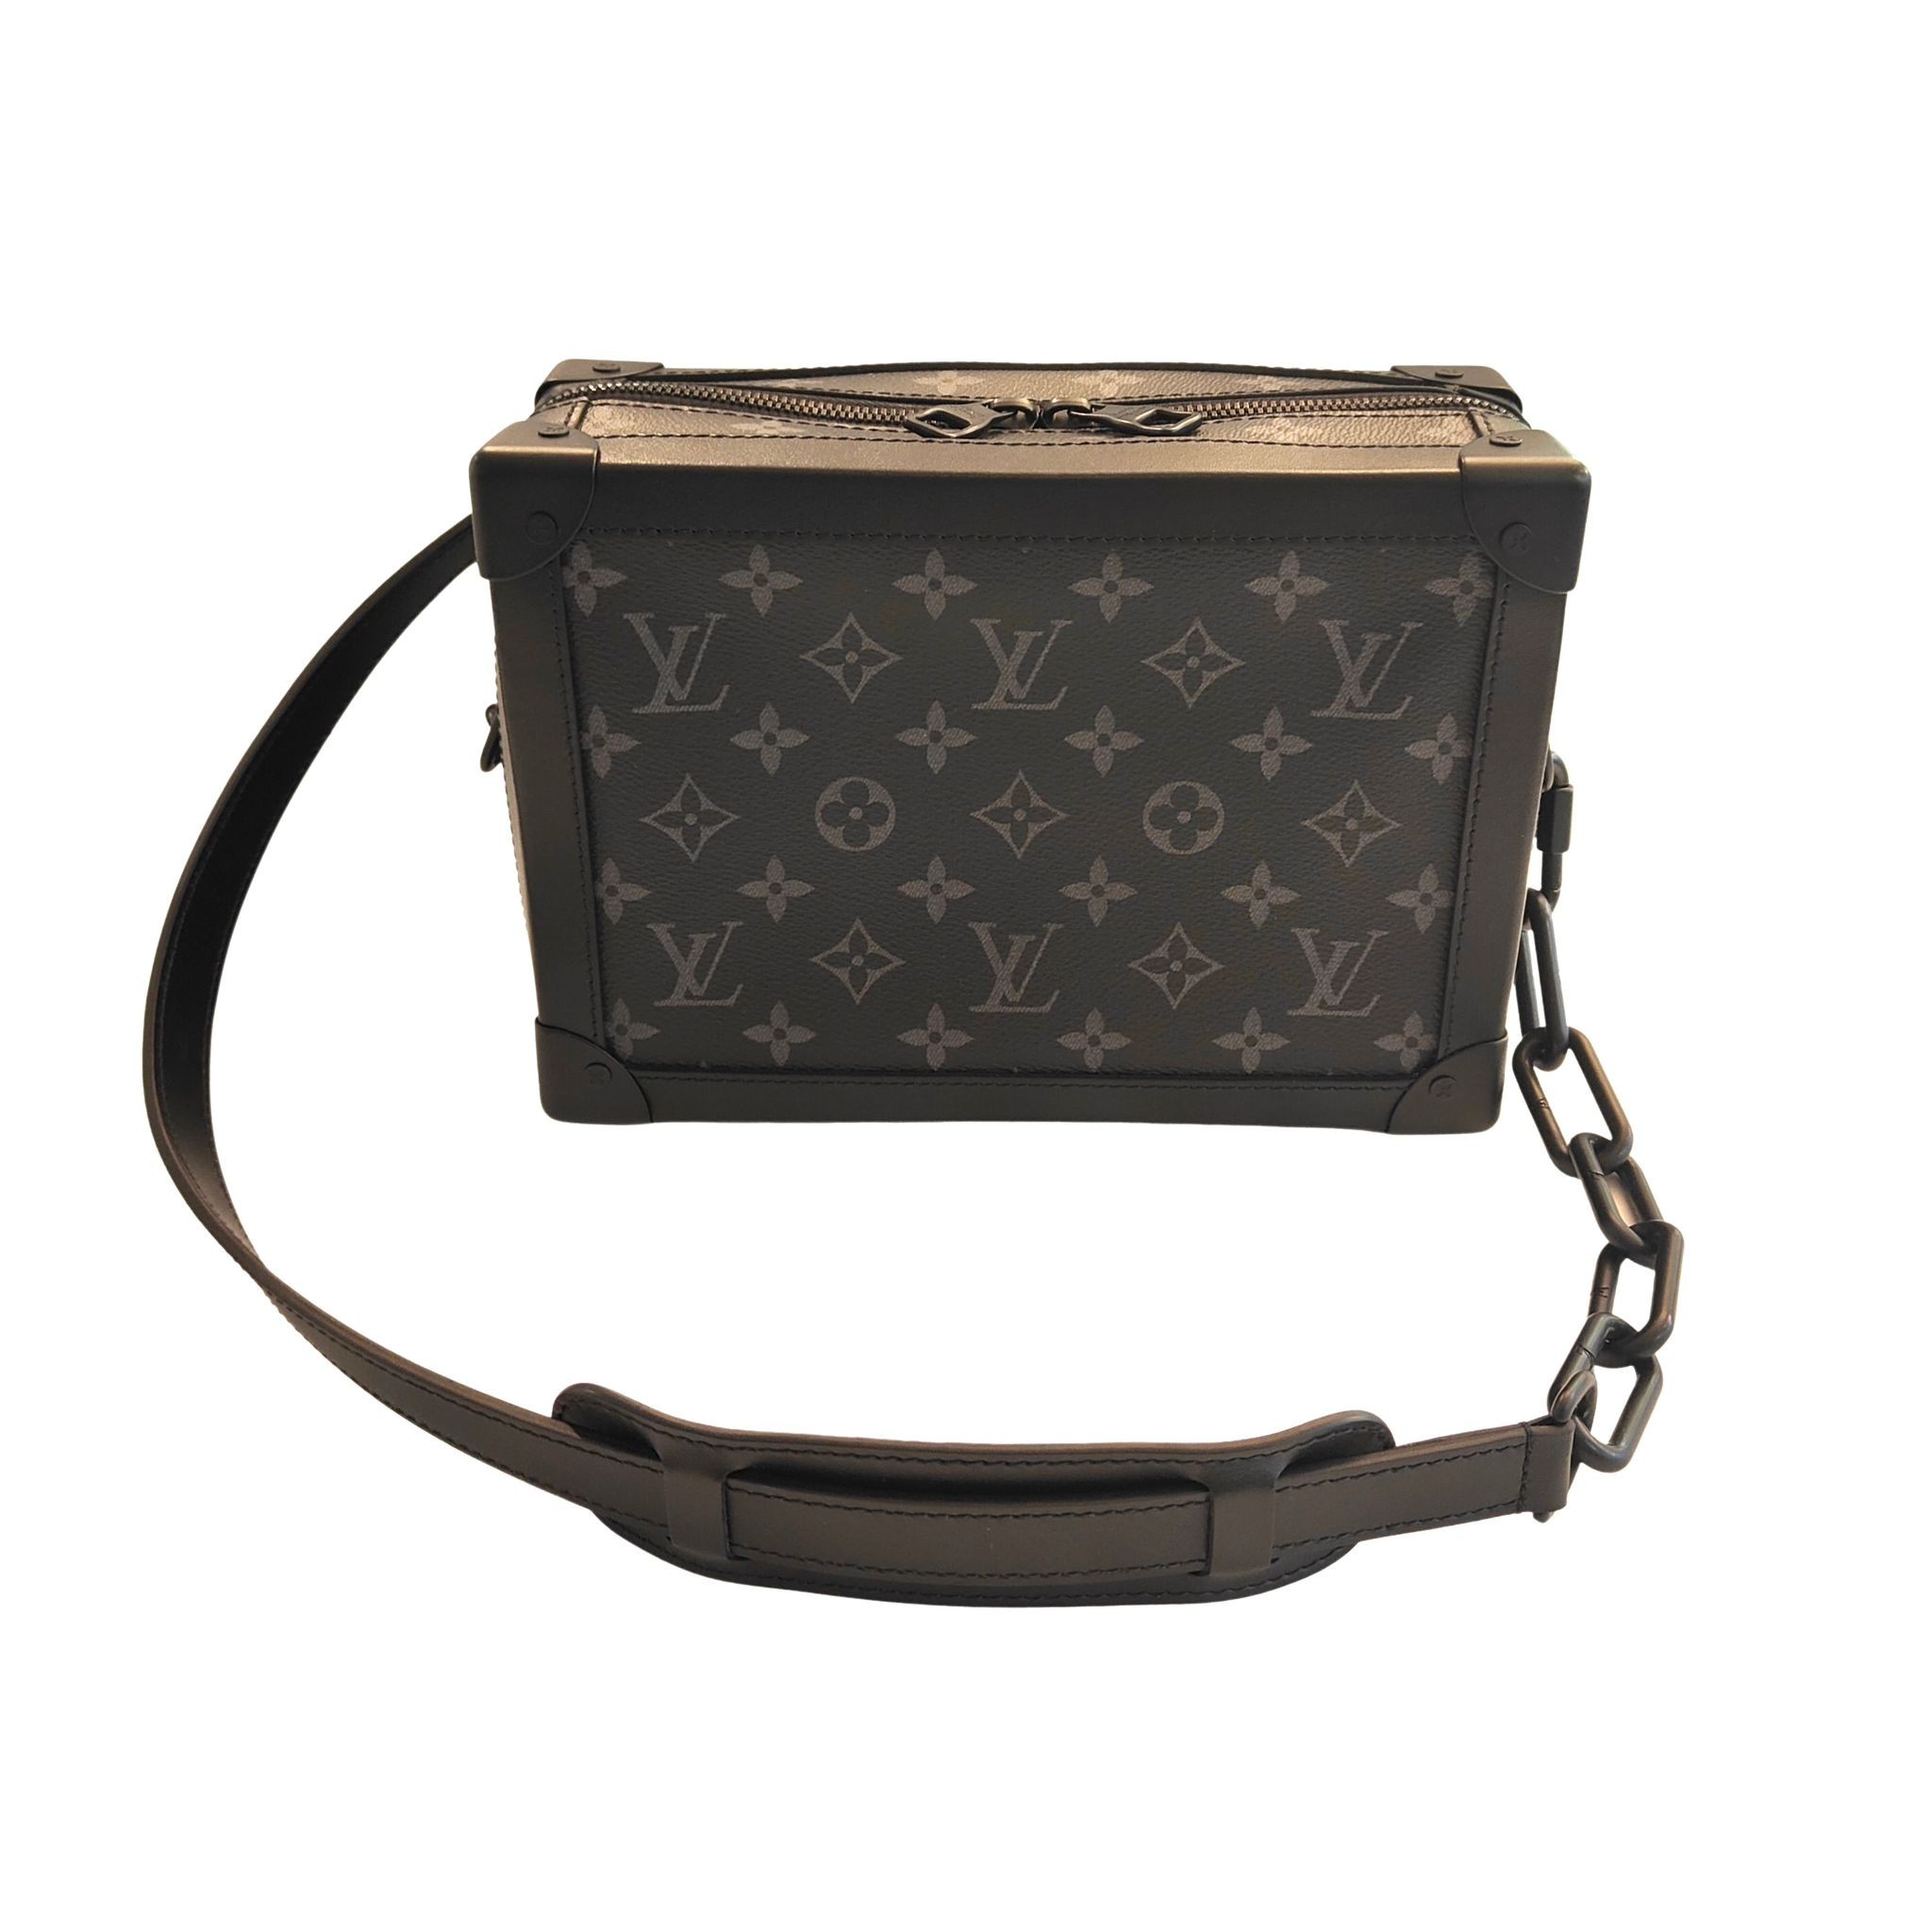 Louis Vuitton brings back the soft trunk bag